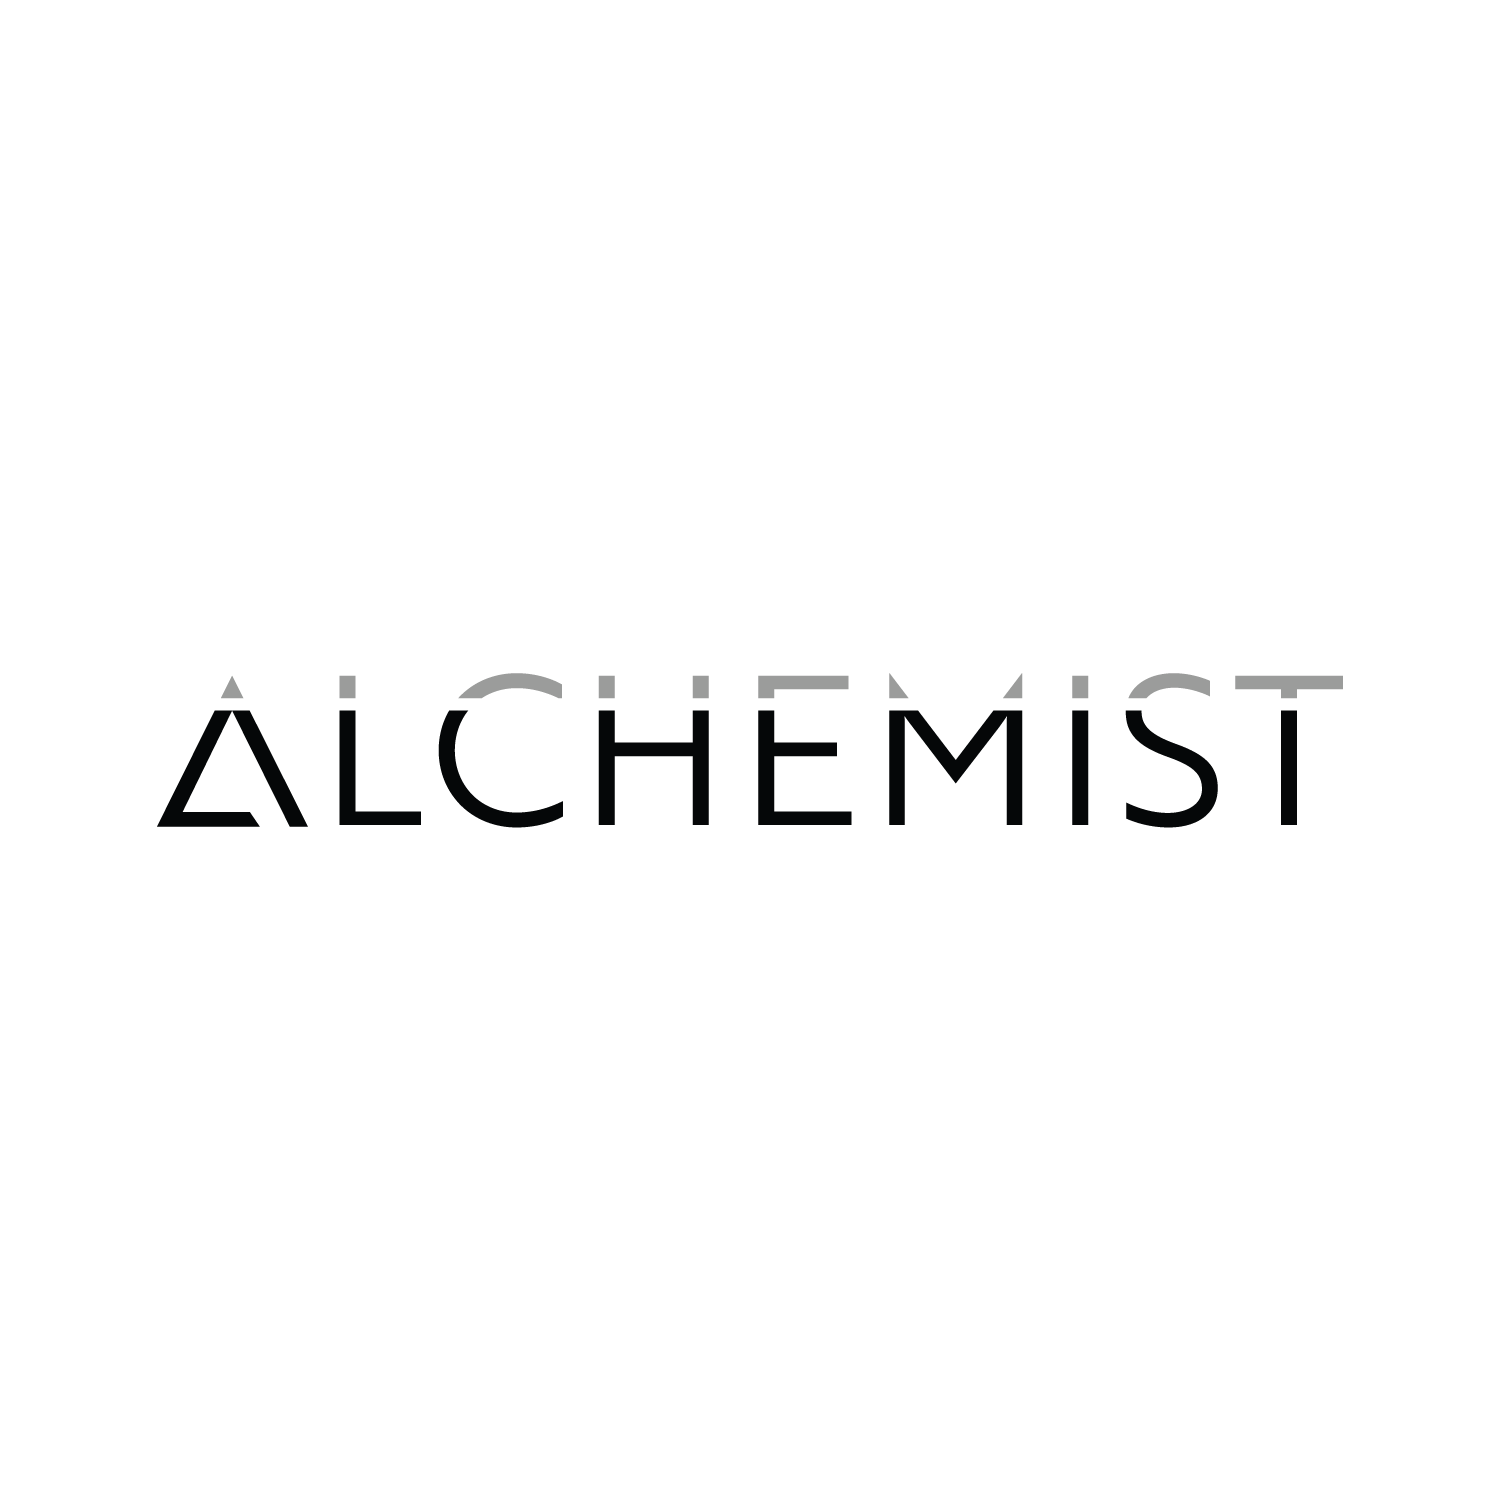 Alchemist-bw